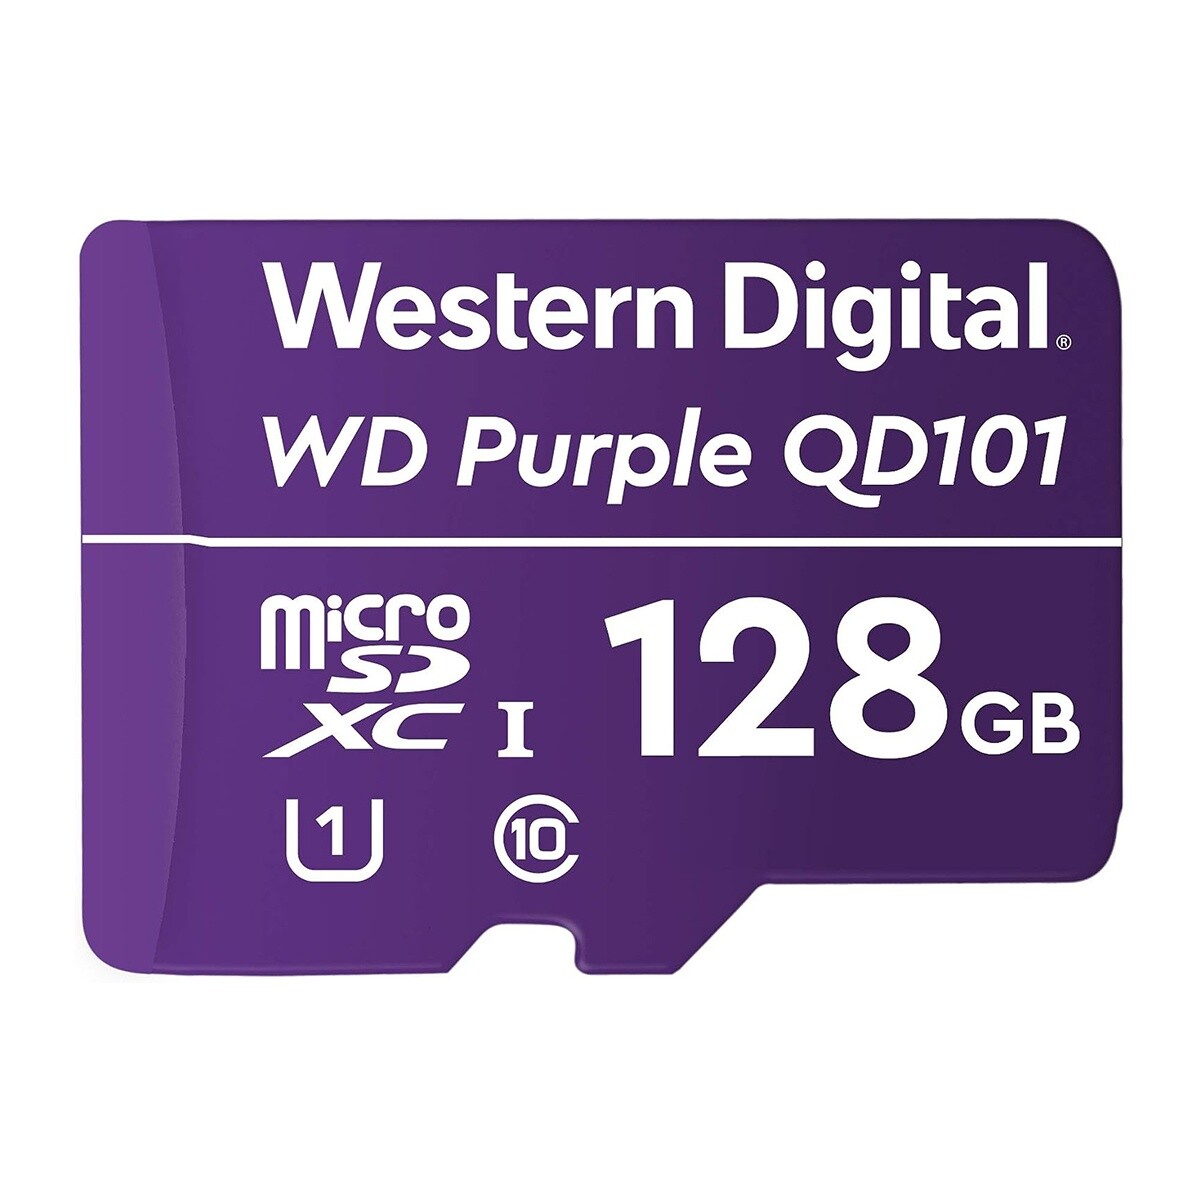 Tarjeta de Memoria microSDXC Western Digital 128GB Purple Clase 10 para Cámaras - Purpura 